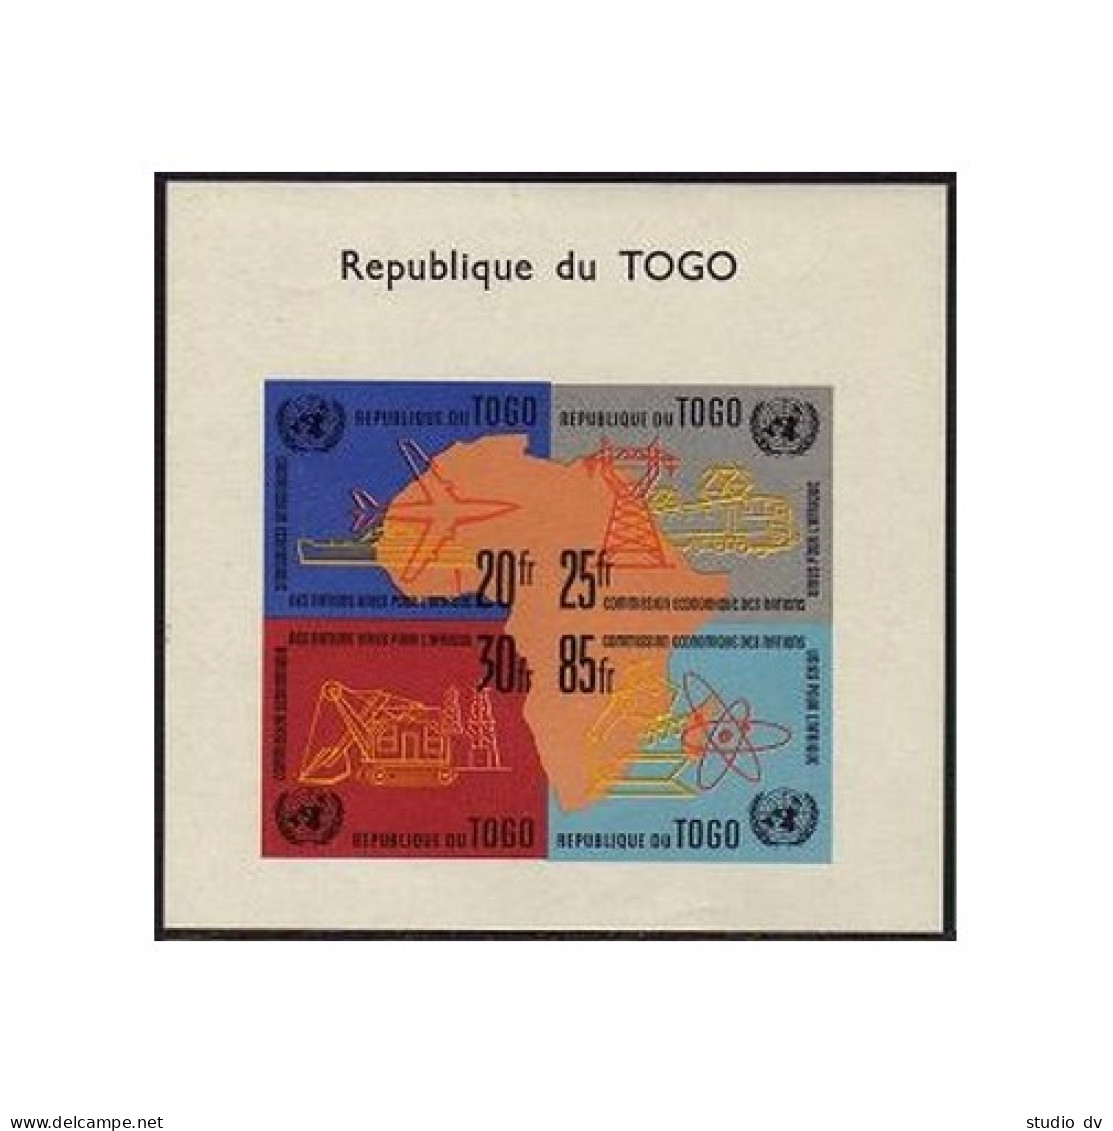 Togo 407-410,410a,MNH.Michel 325-328,Bl.4. UN Economic Commission-Africa,1961. - Togo (1960-...)